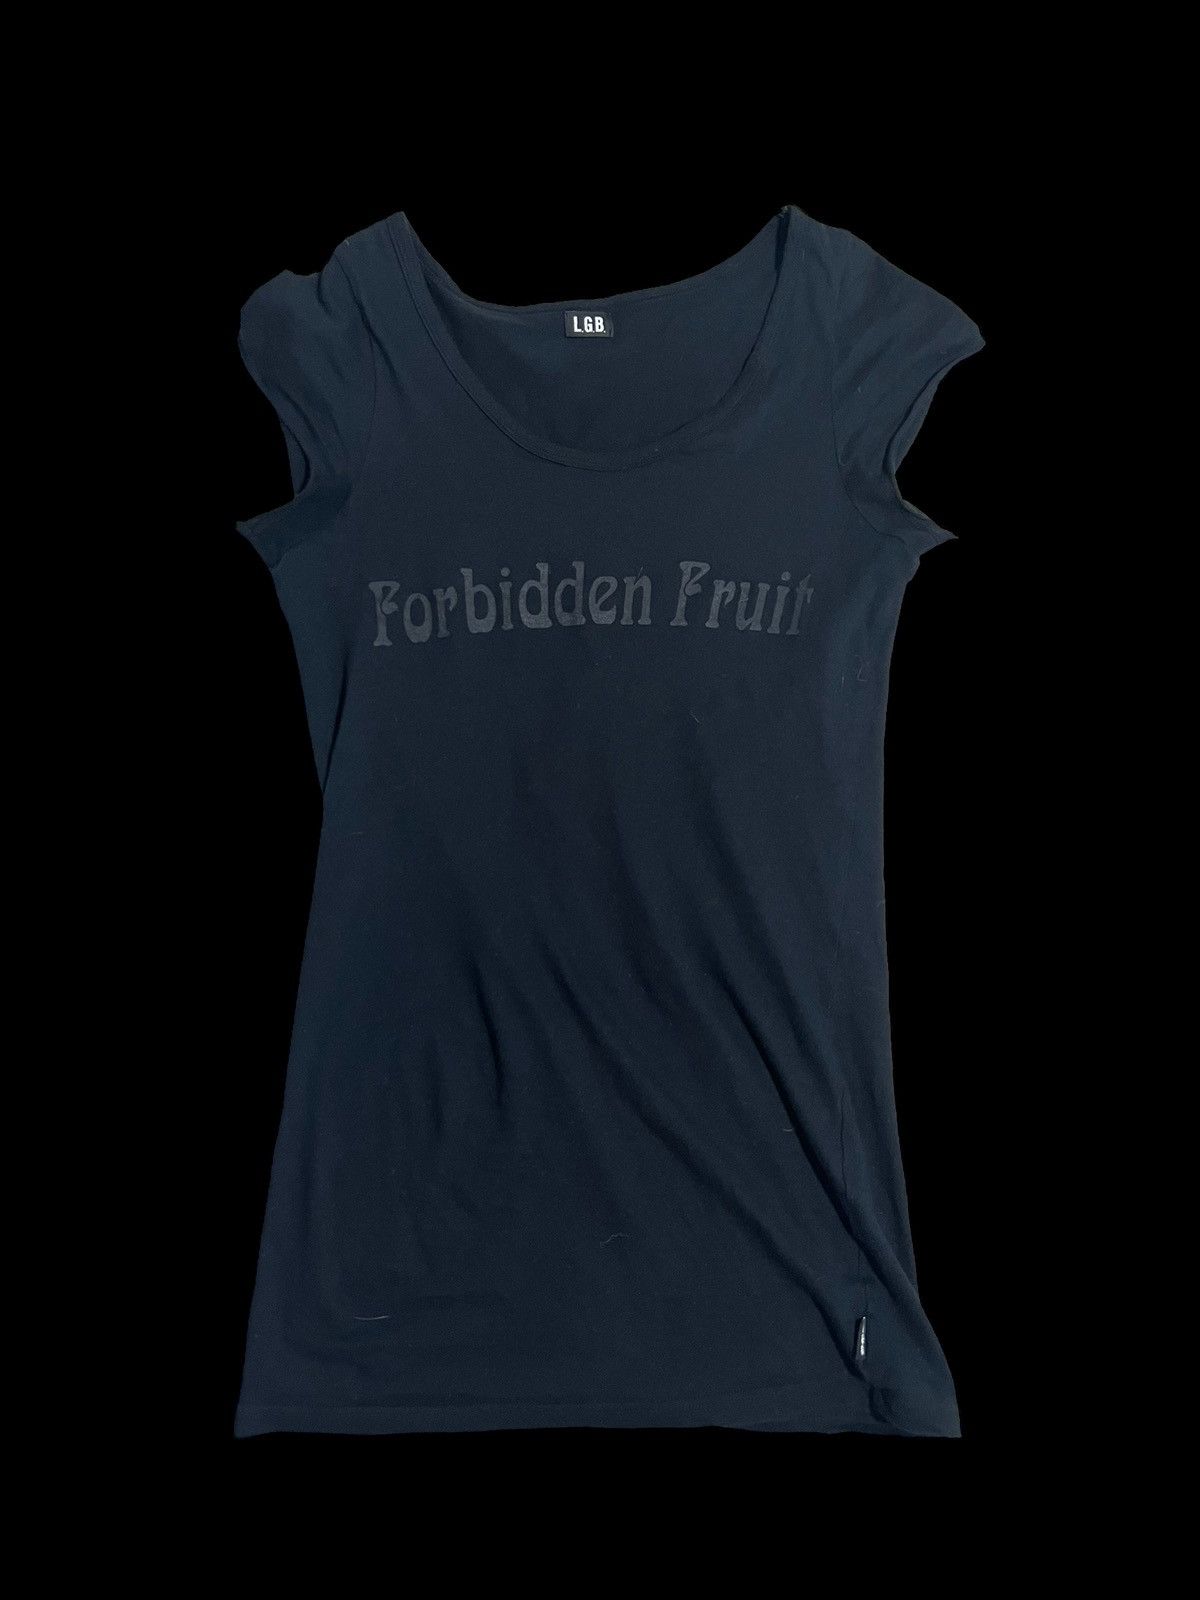 Pre-owned Lgb Forbidden Fruit Shirt In Black